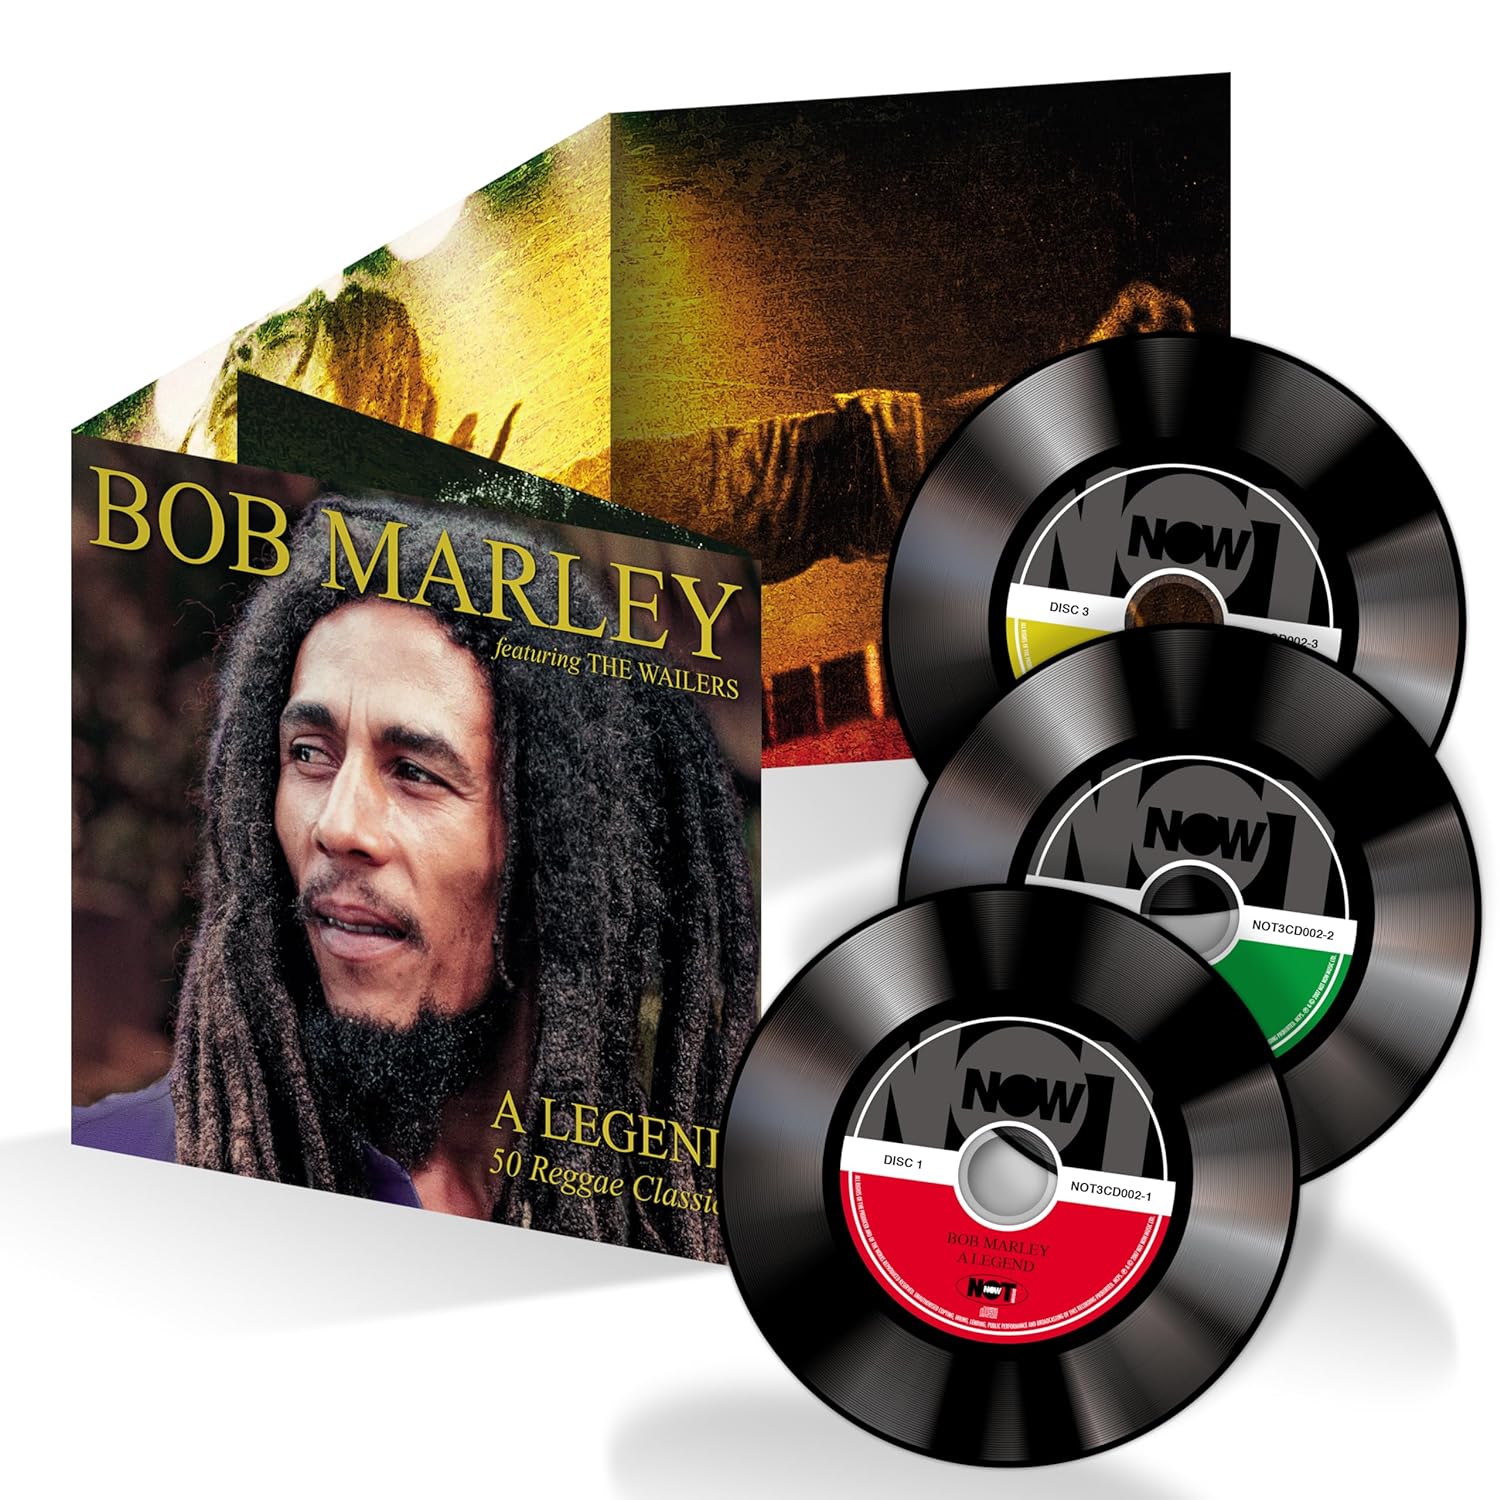 Bob Marley & The Wailers - A Legend: 50 Reggae Classics (2009, 3 CD Set)